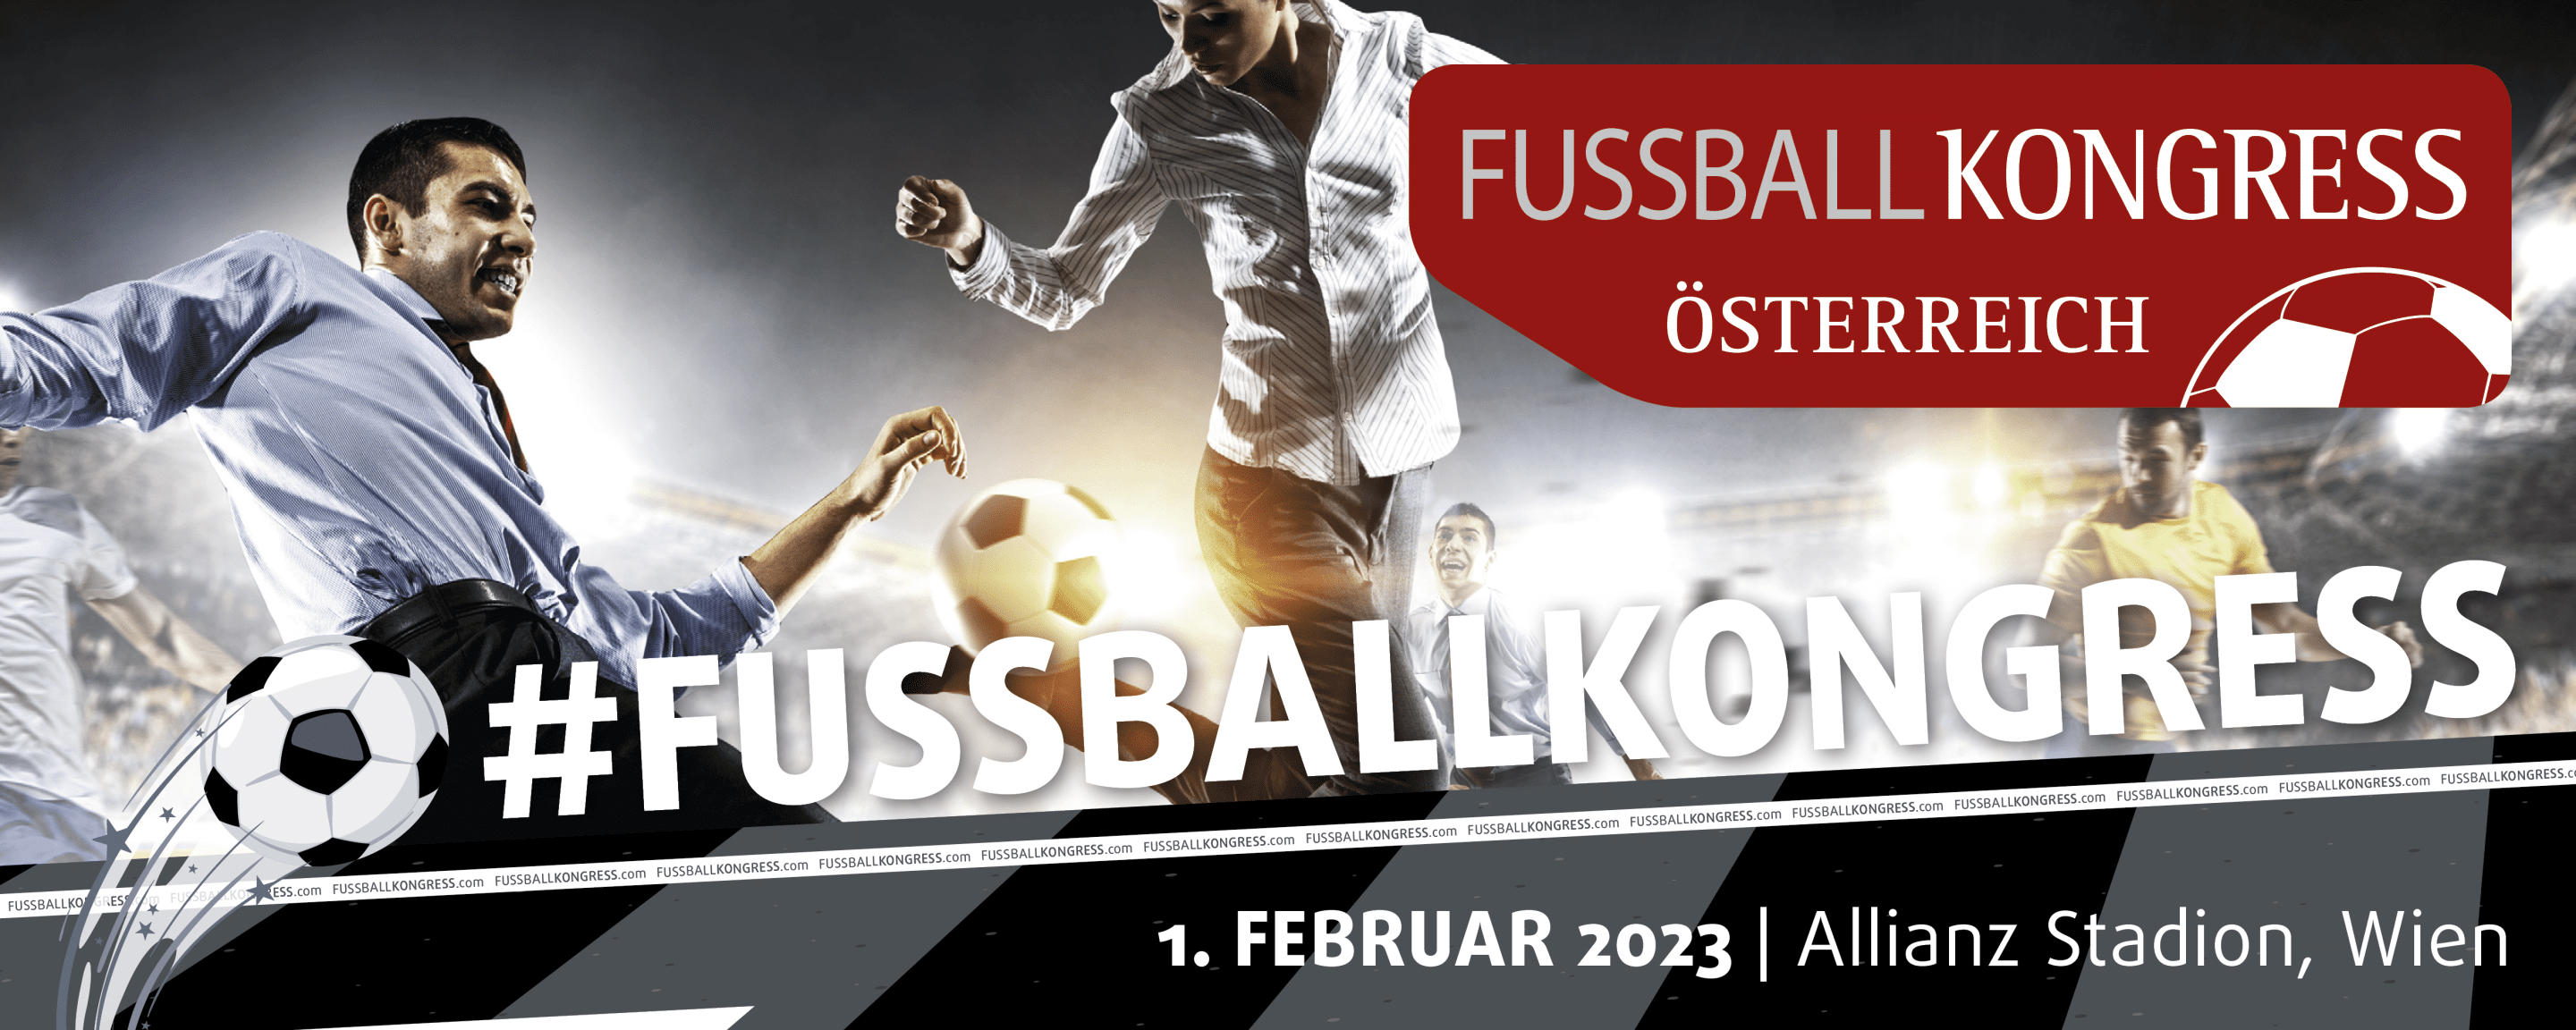 FUSSBALL KONGRESS Österreich 2022